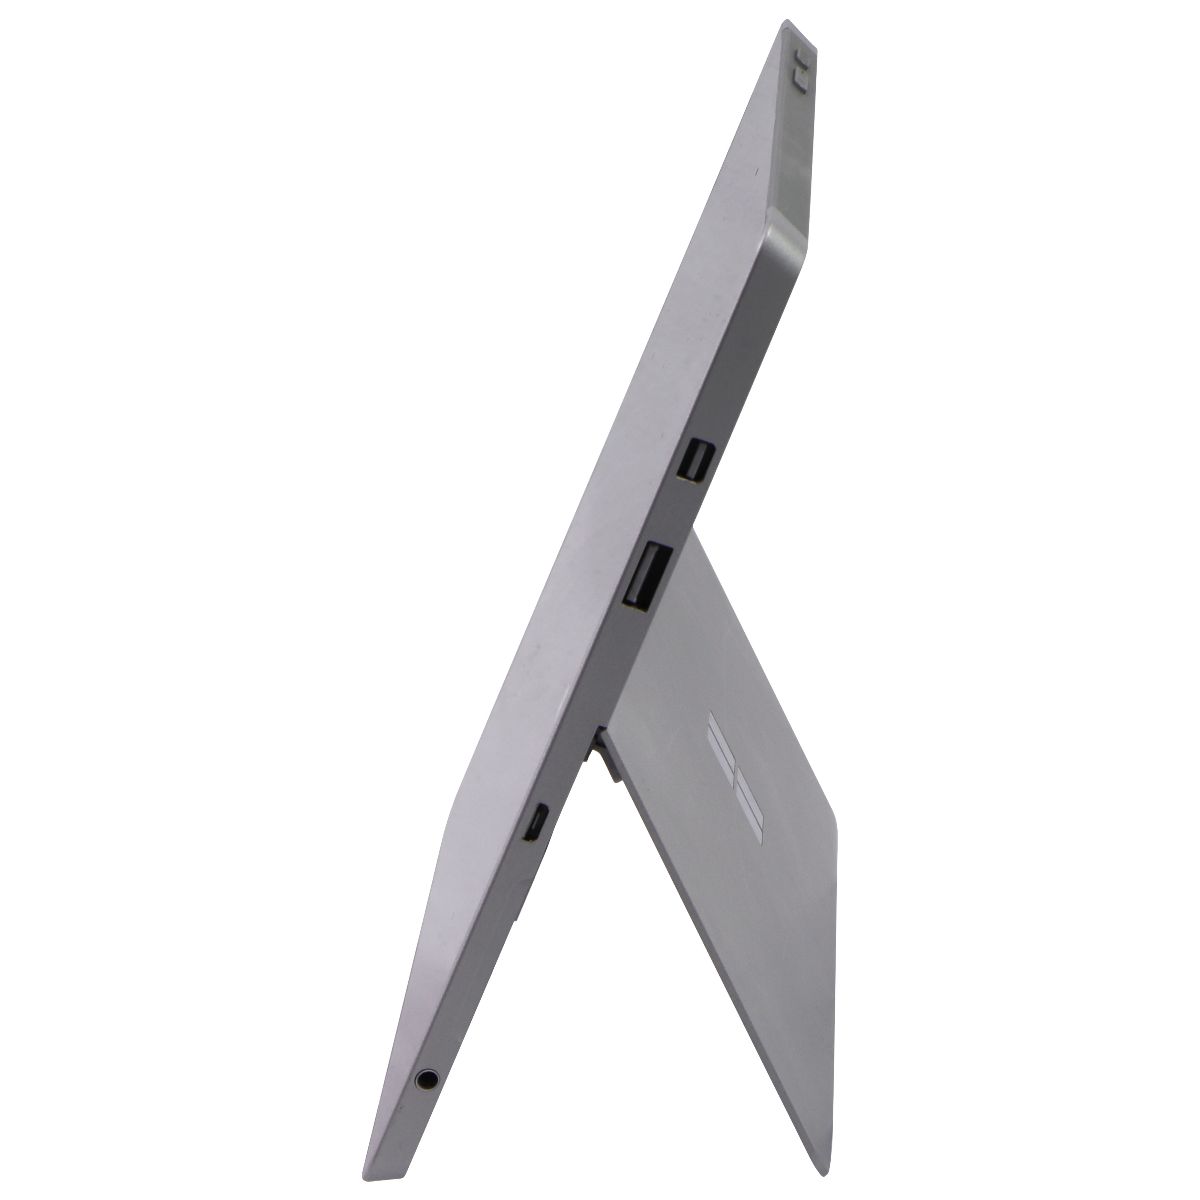 Microsoft Surface 3 (10.8-inch) Tablet 1657 LTE (Verizon) - 128GB / Silver